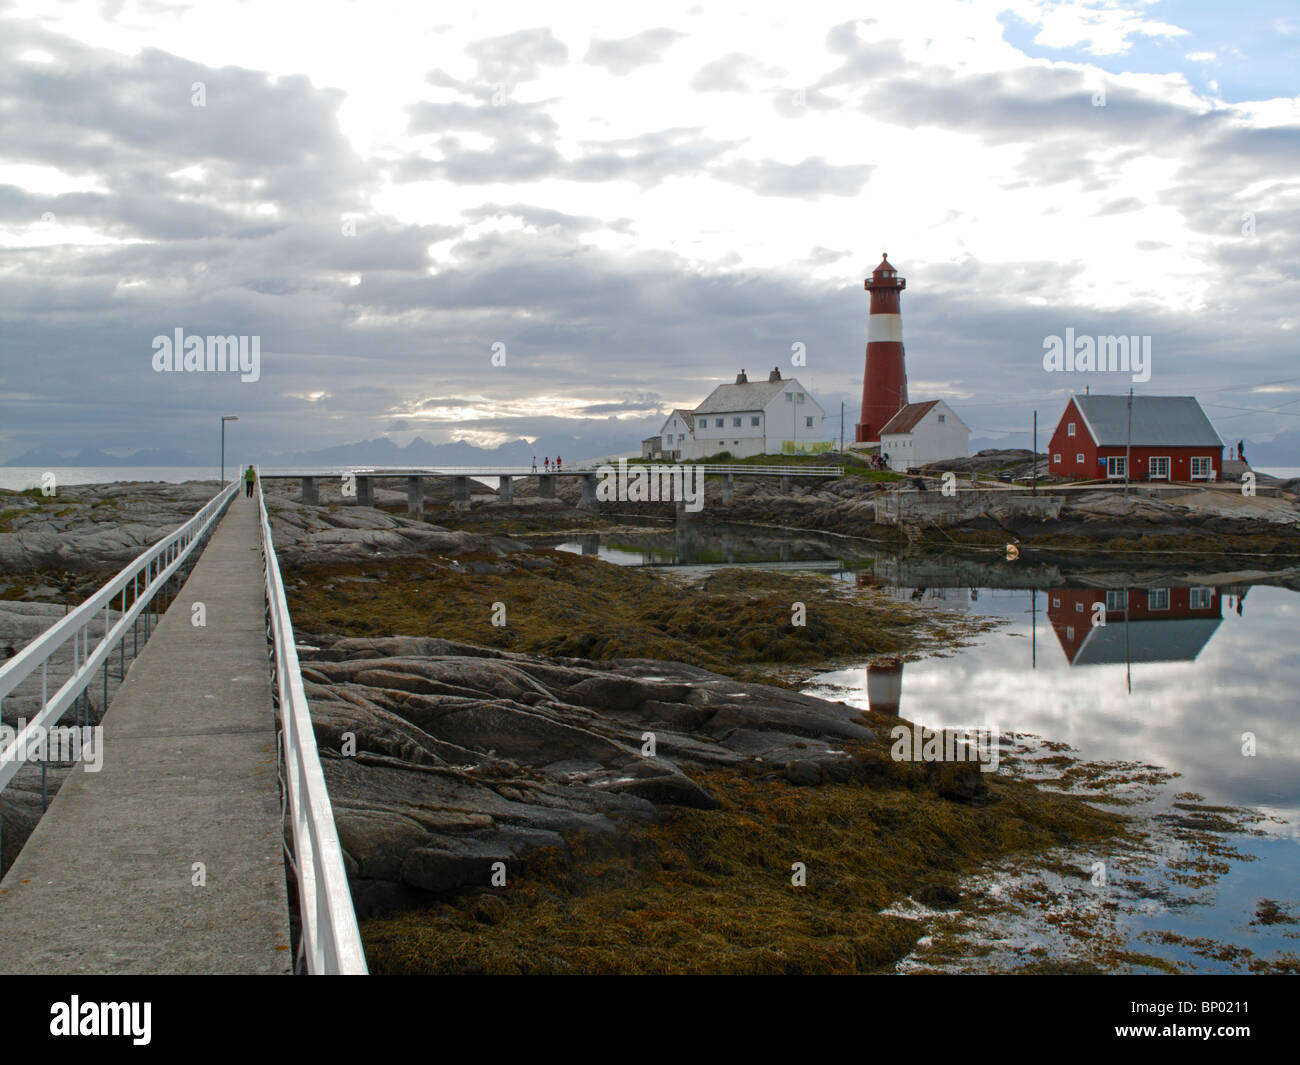 Tranoy Fyr, a lighthouse on Hamaroy, Norway Stock Photo